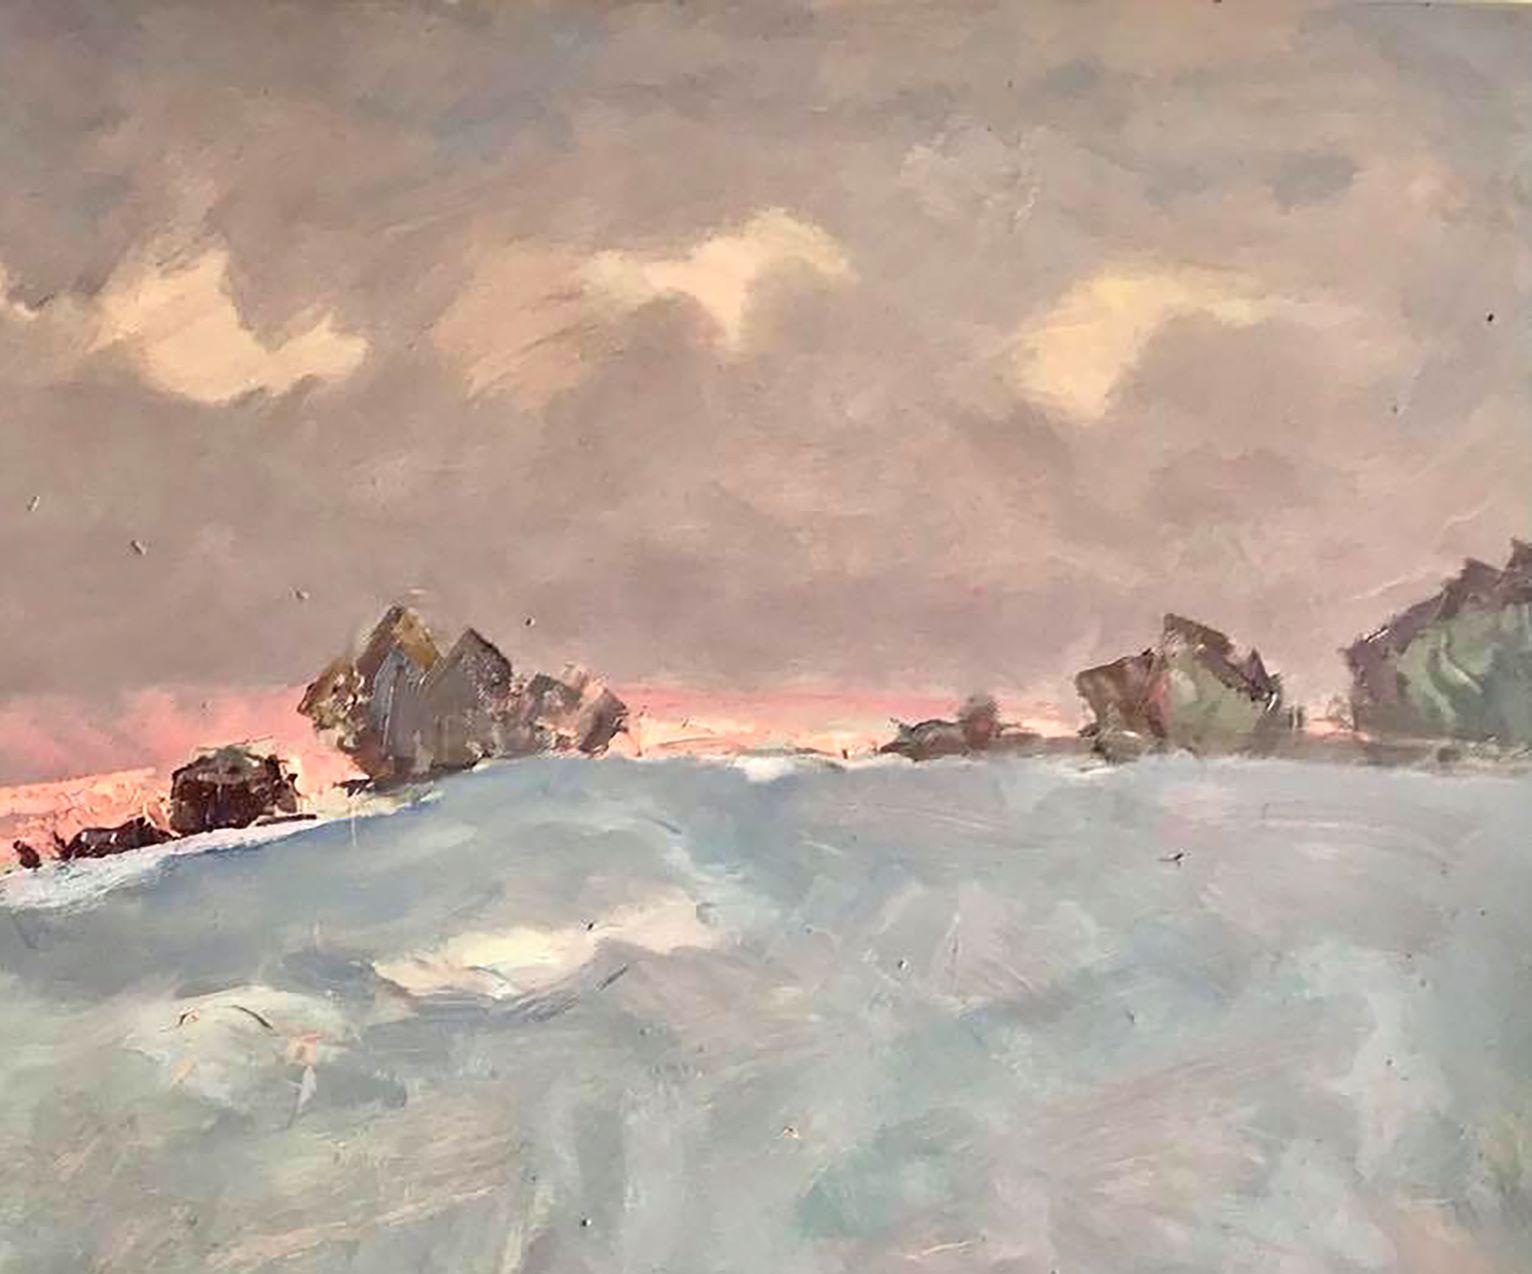 Artist: Alex Kalenyuk 
Work: Original oil painting, handmade artwork, one of a kind 
Medium: Oil on canvas 
Year: 2021
Style: Impressionism
Title: Winter Evening
Size: 31.5